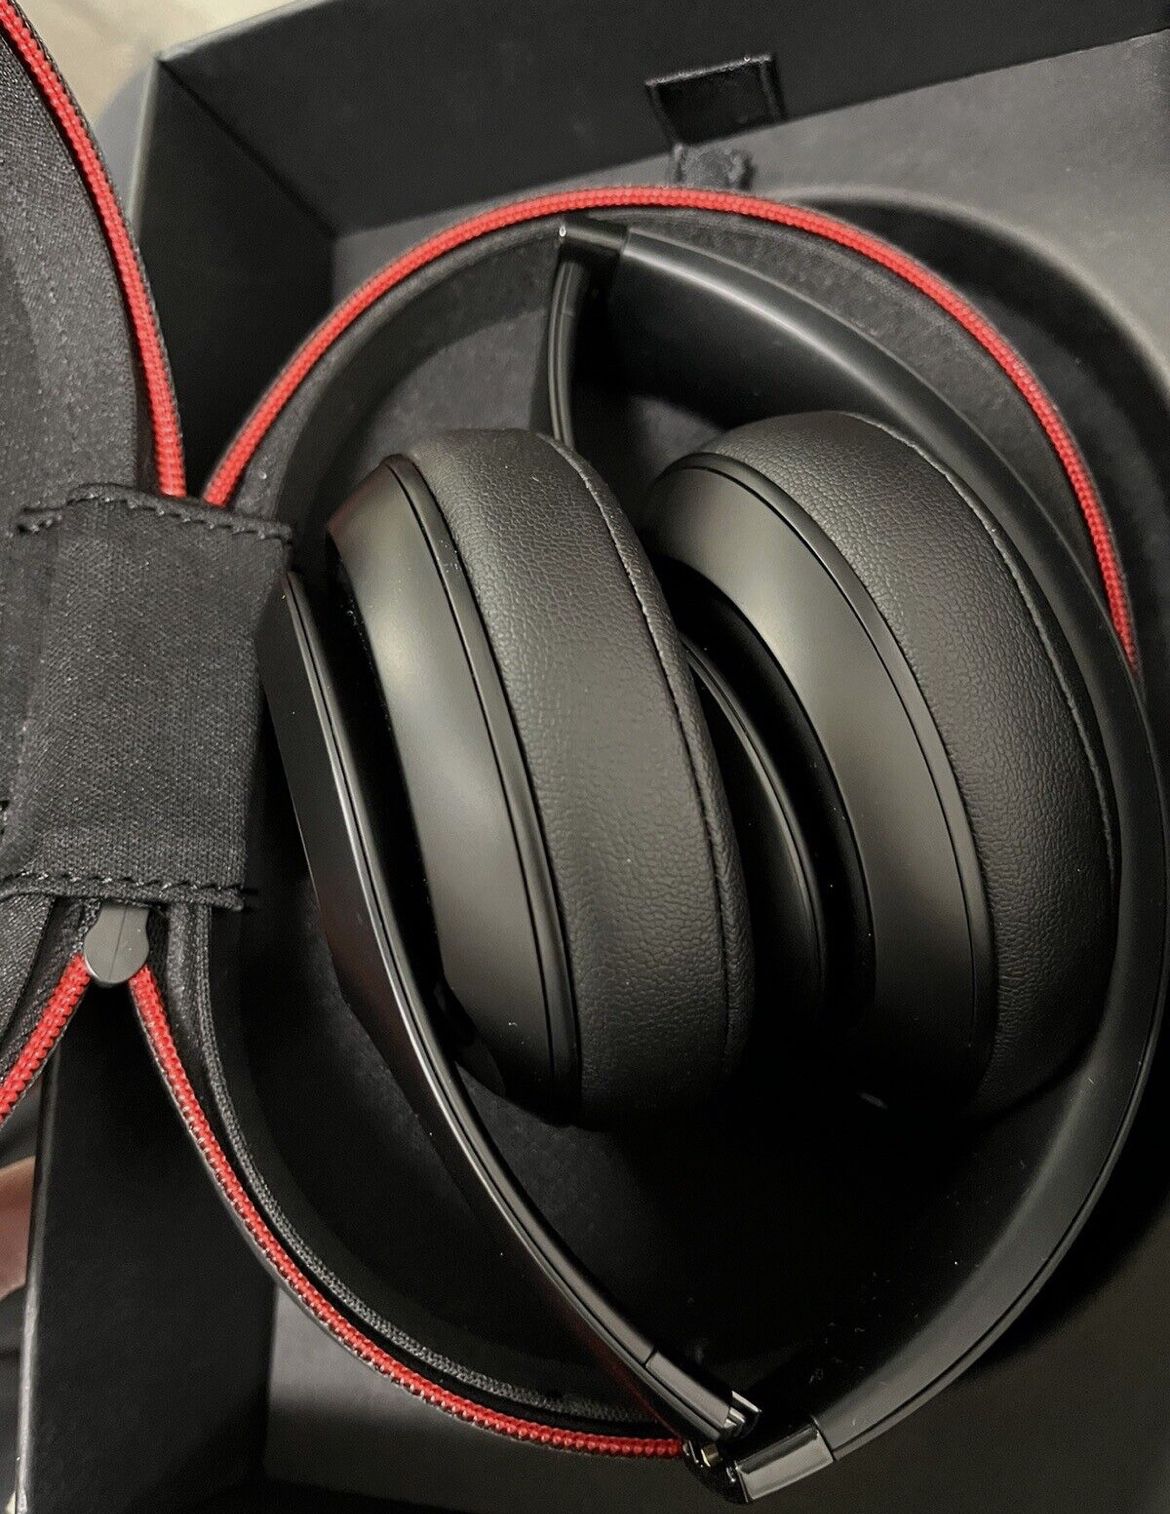 Beats by Dr. Dre Studio3 Over the Ear Wireless Headphones - Black